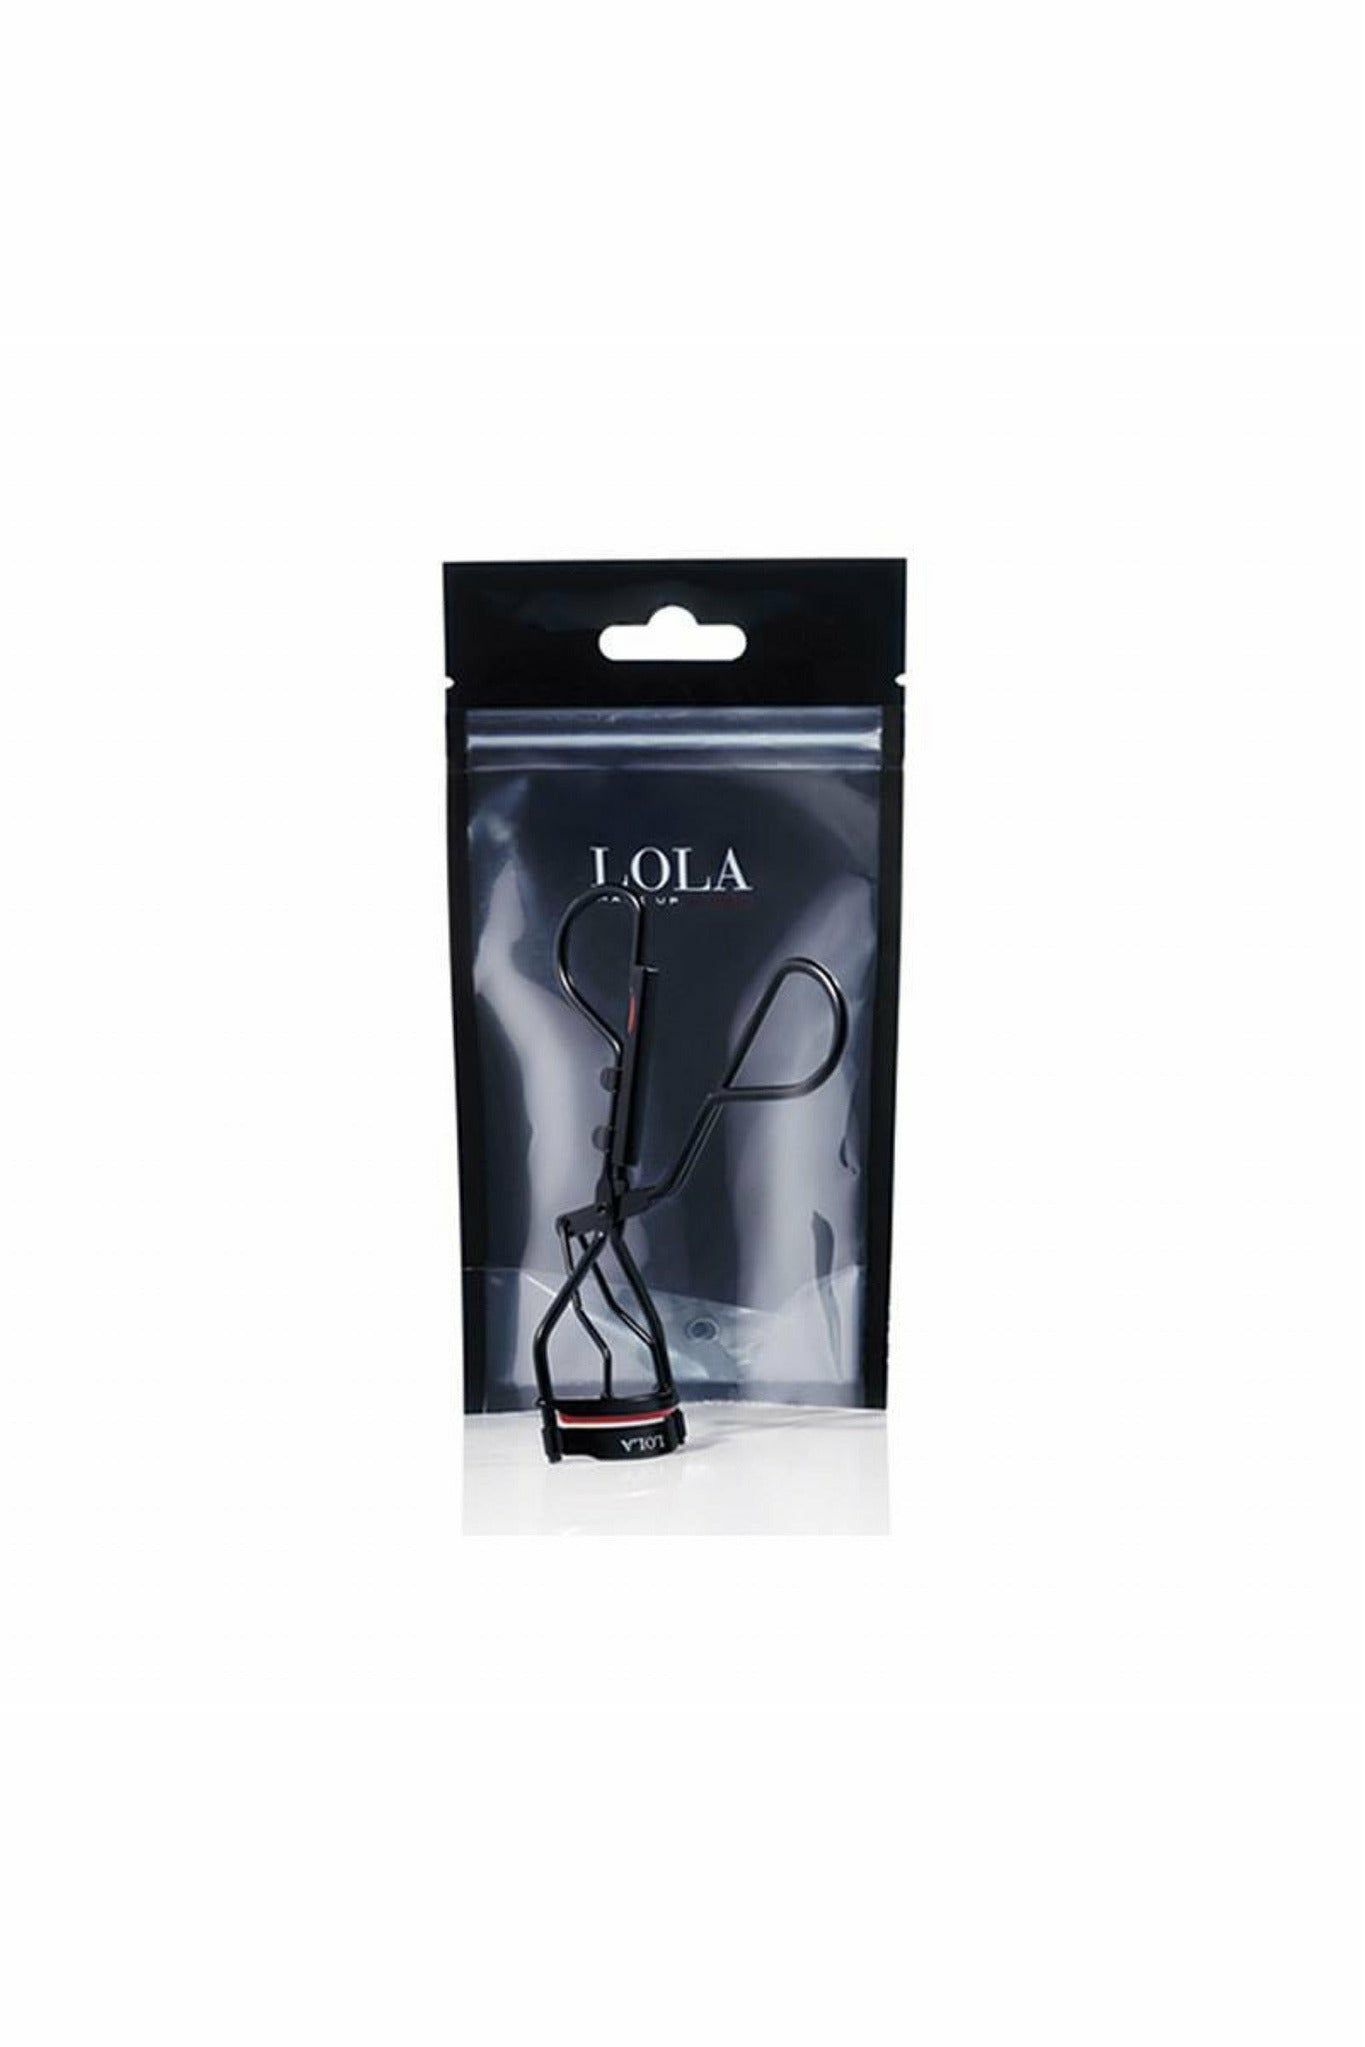 Lola Make up Easy Grip Pro Eye Lash Curler